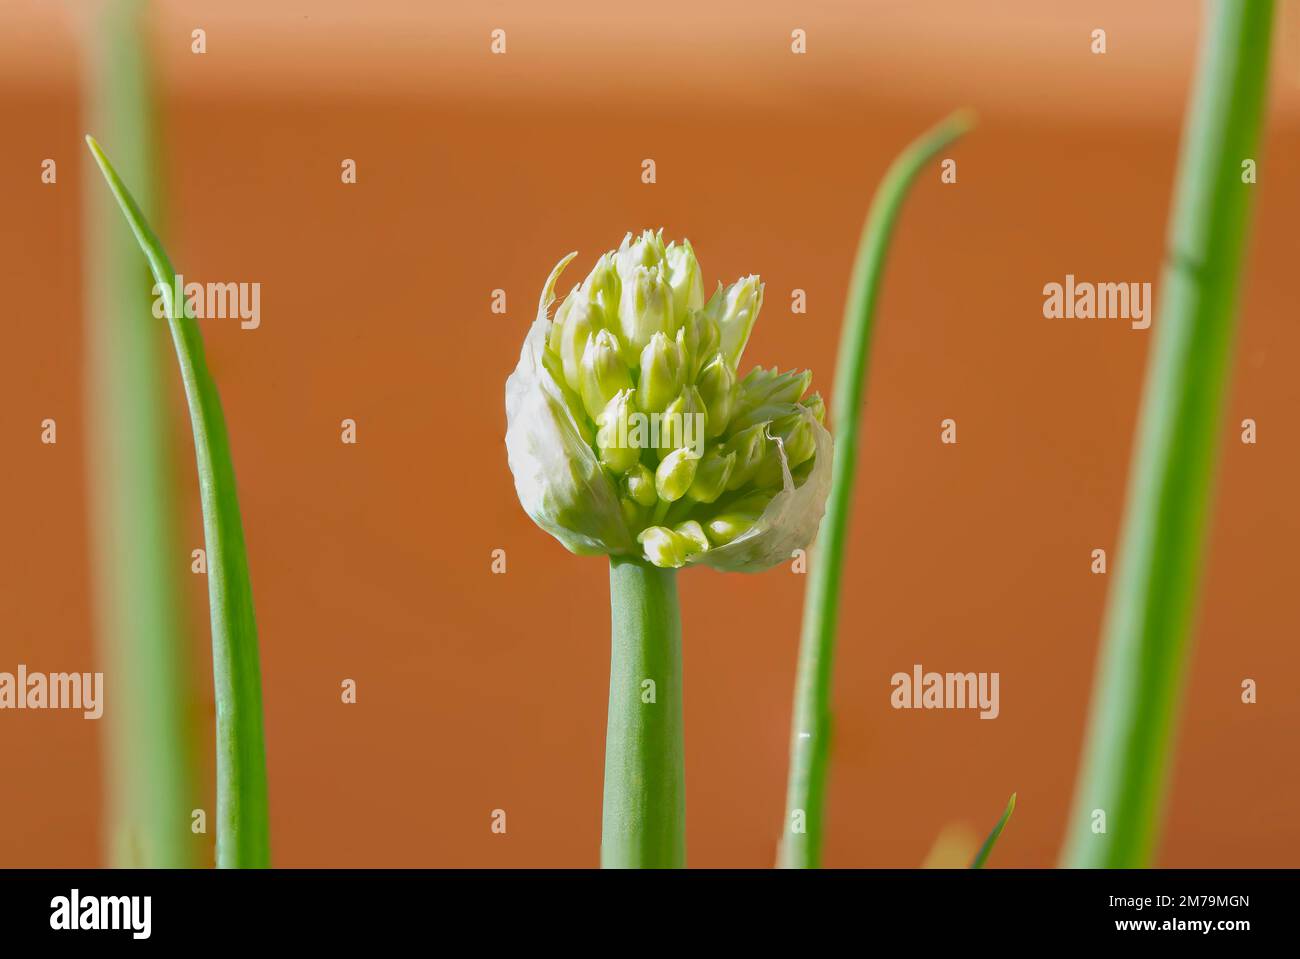 Cipolla fiorita (Allium cepa) pianta Foto stock - Alamy